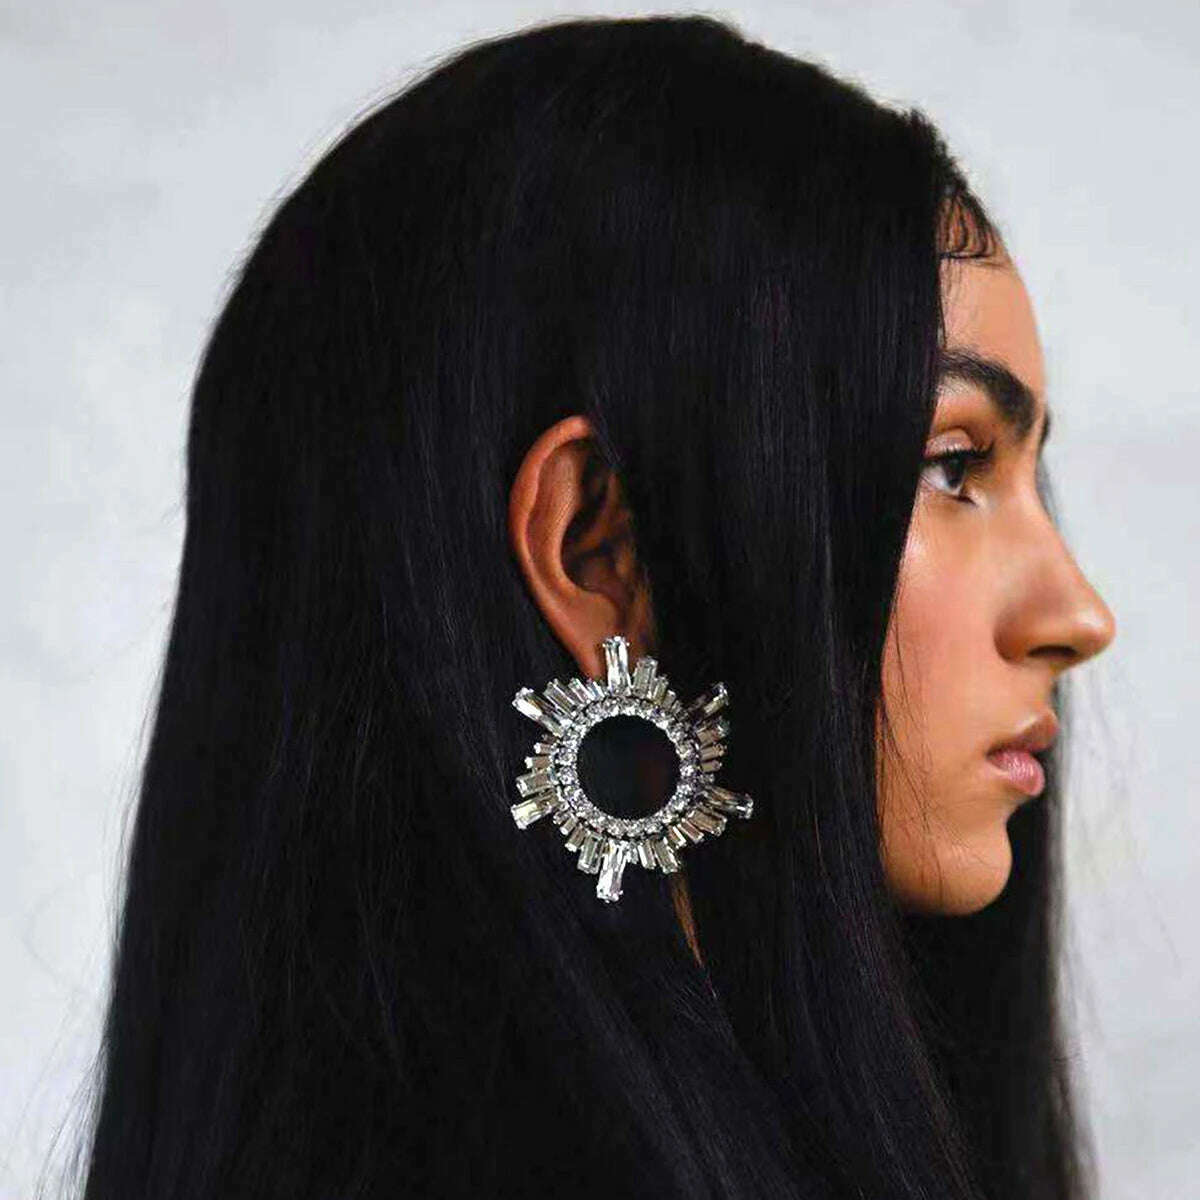 KIMLUD, JIJIAWENHUA New Trend women's Shiny Rhinestone Drop Earrings Modern Girl's Fashion Jewelry Accessories Hot Sale, KIMLUD Women's Clothes